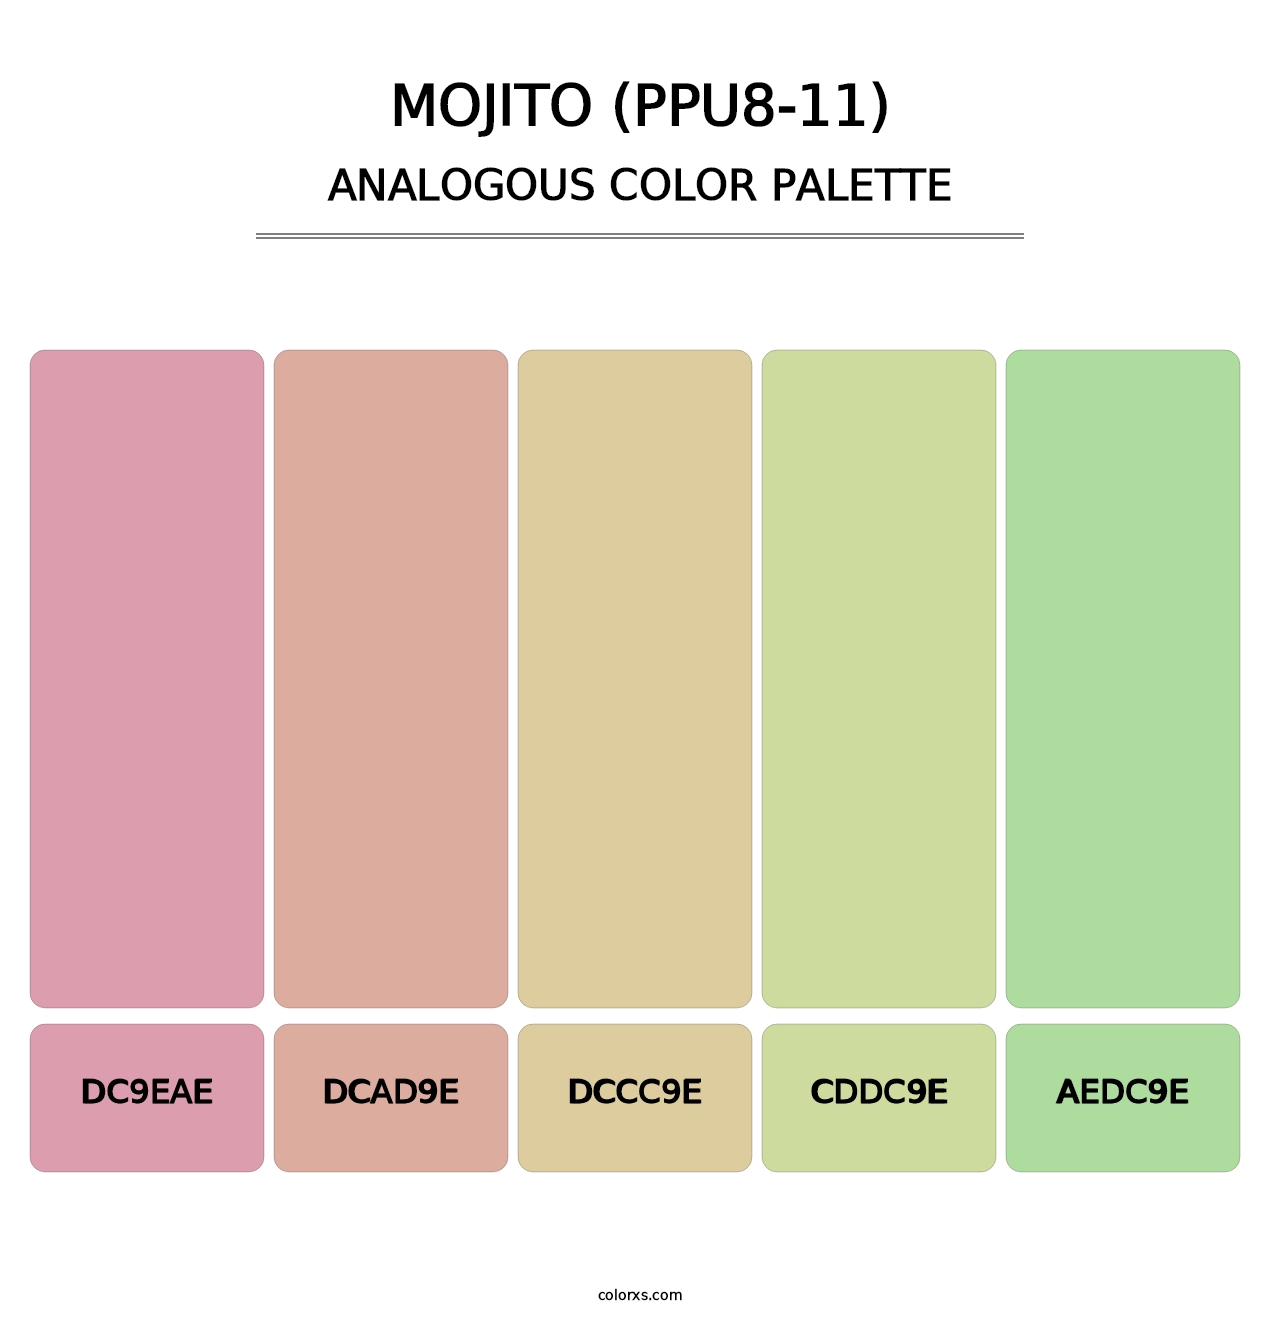 Mojito (PPU8-11) - Analogous Color Palette